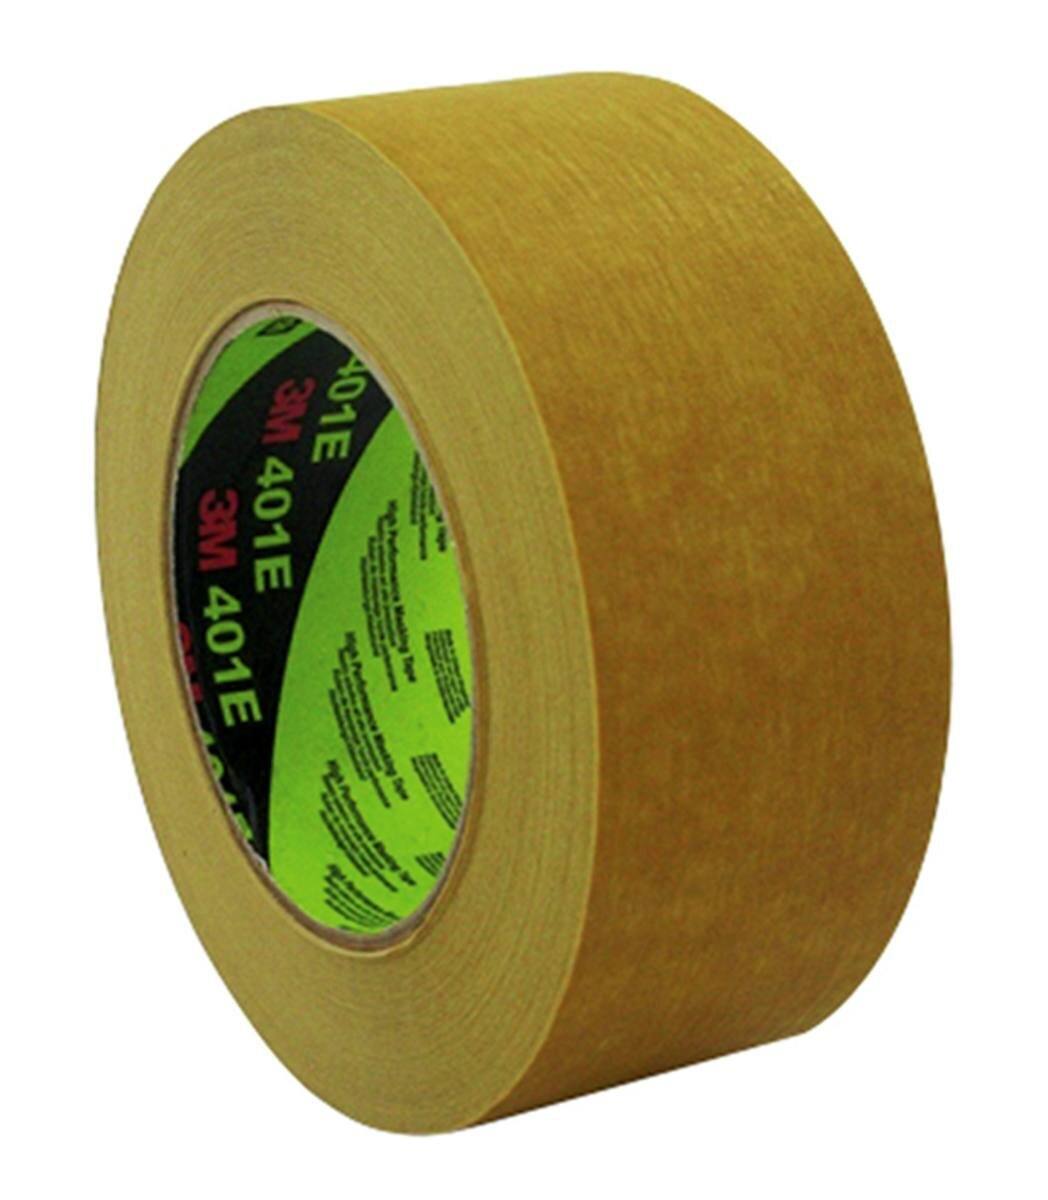 3M Crepe tape 401E, brown, 48 mm x 50 m, 0.160 mm